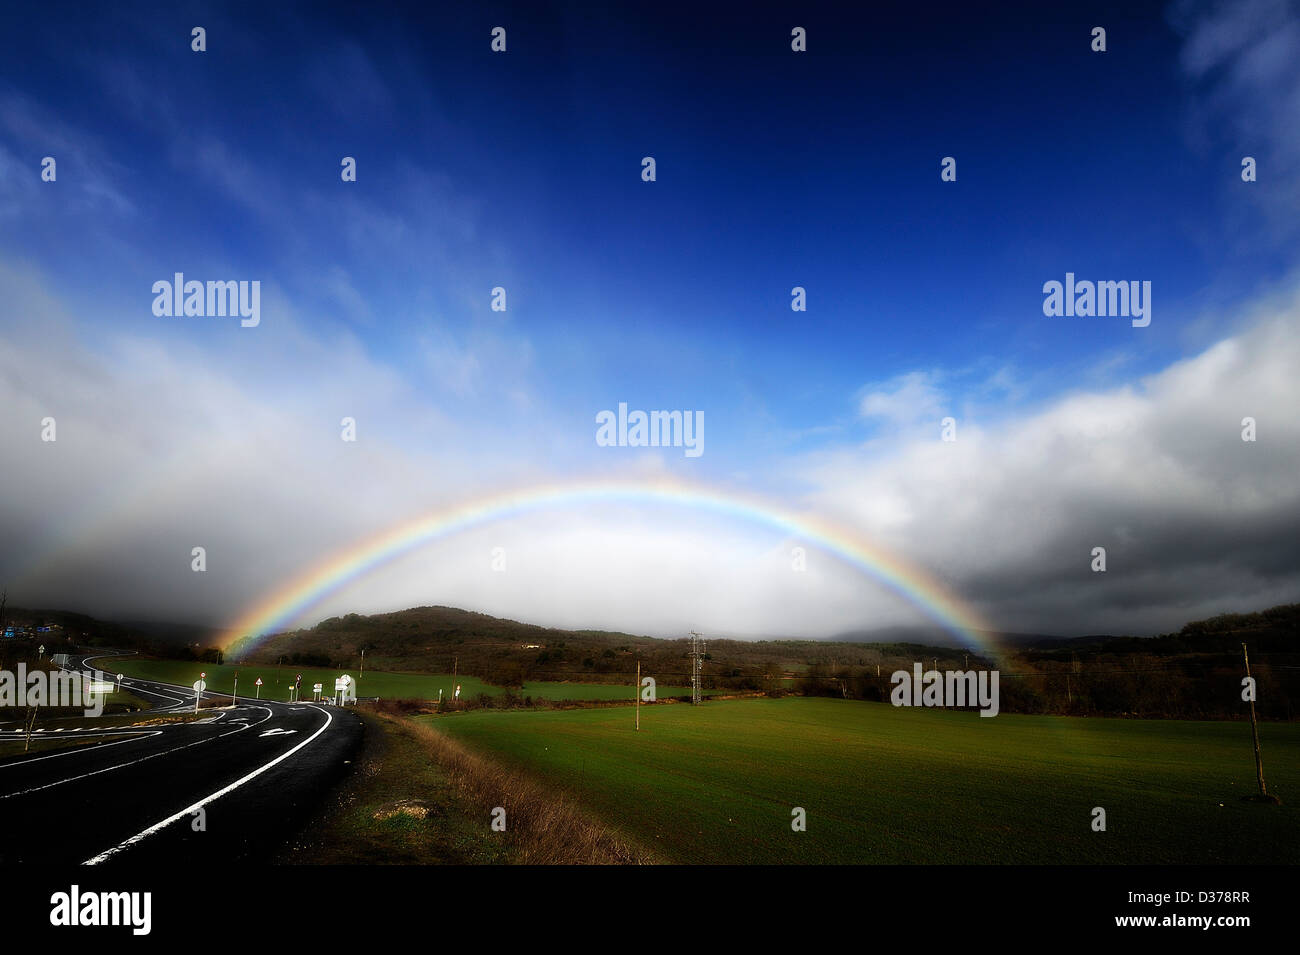 Regenbogen über Feld und Straße Stockfoto